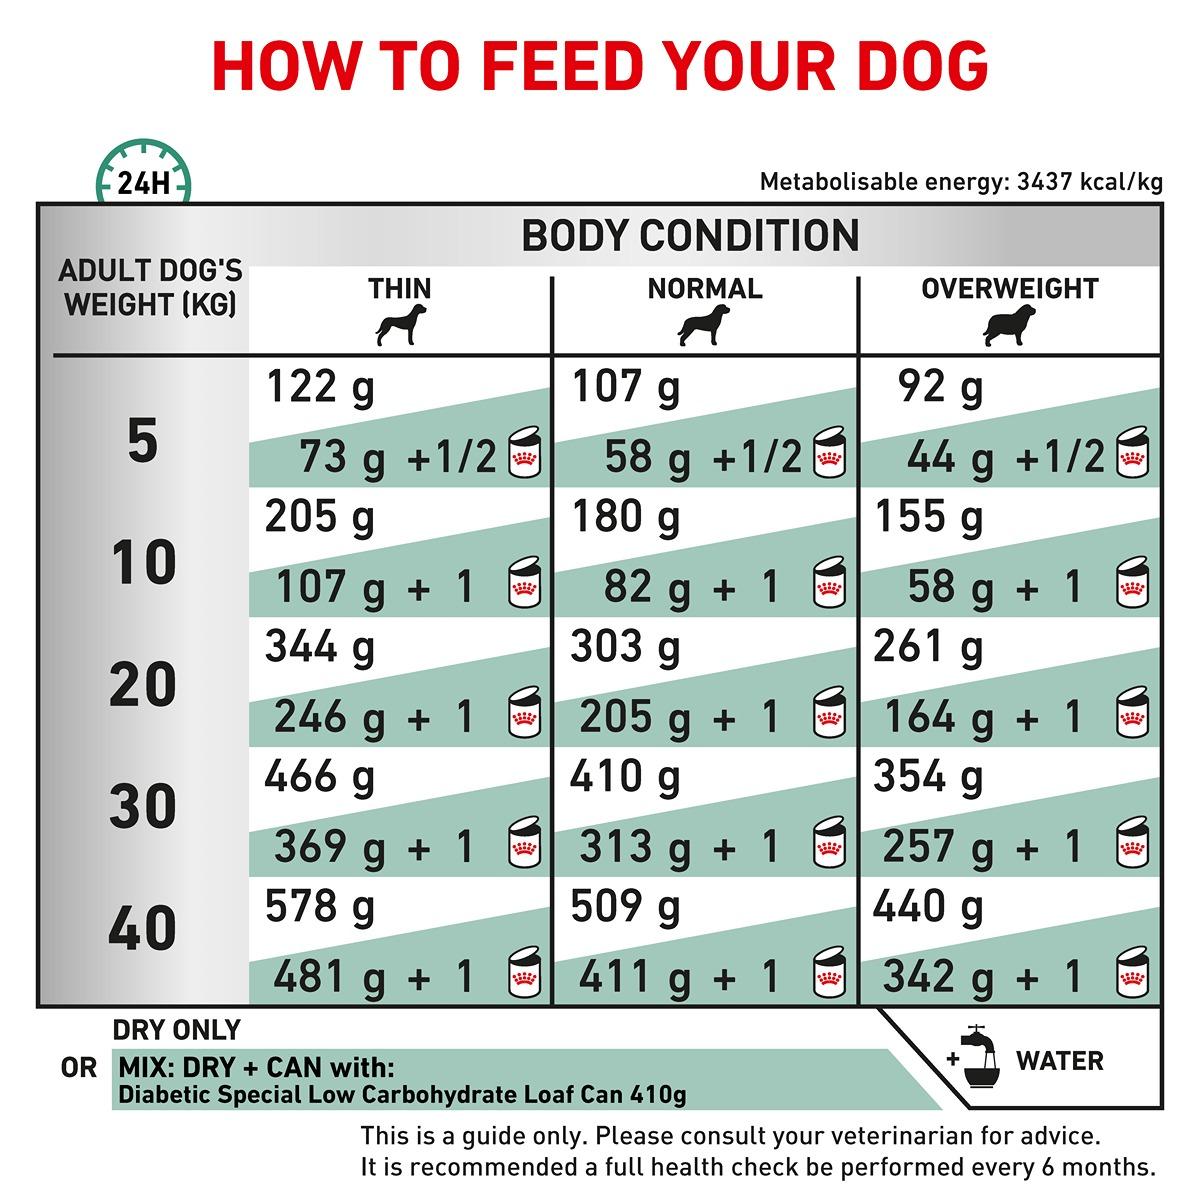 Royal Canin Veterinary Diet Diabetic